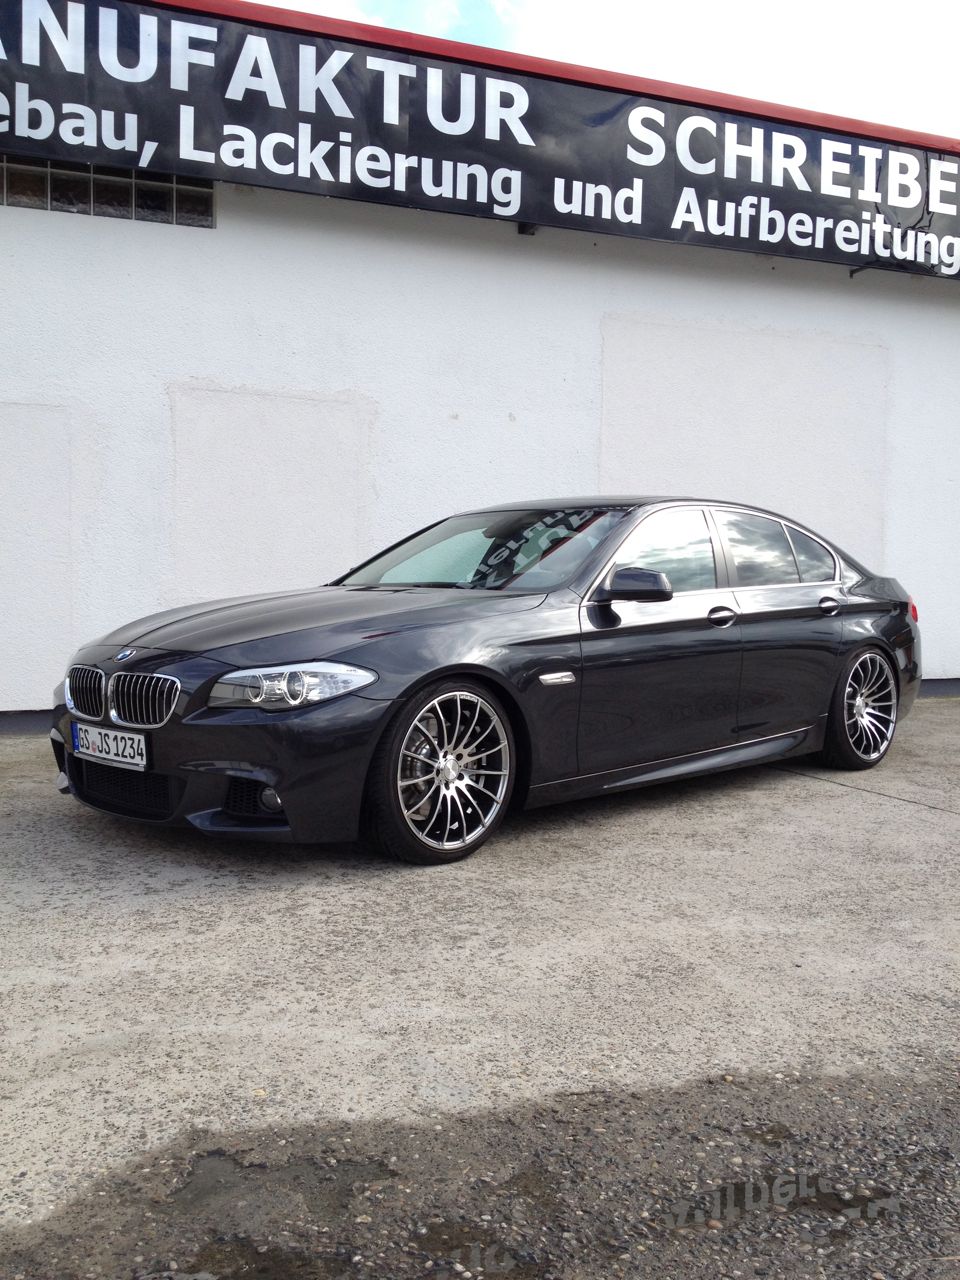 https://www.automanufaktur-schreiber.de/wp-content/uploads/2013/02/BMW-F10-M-Paket-Umbau-%E2%80%93-1.jpg